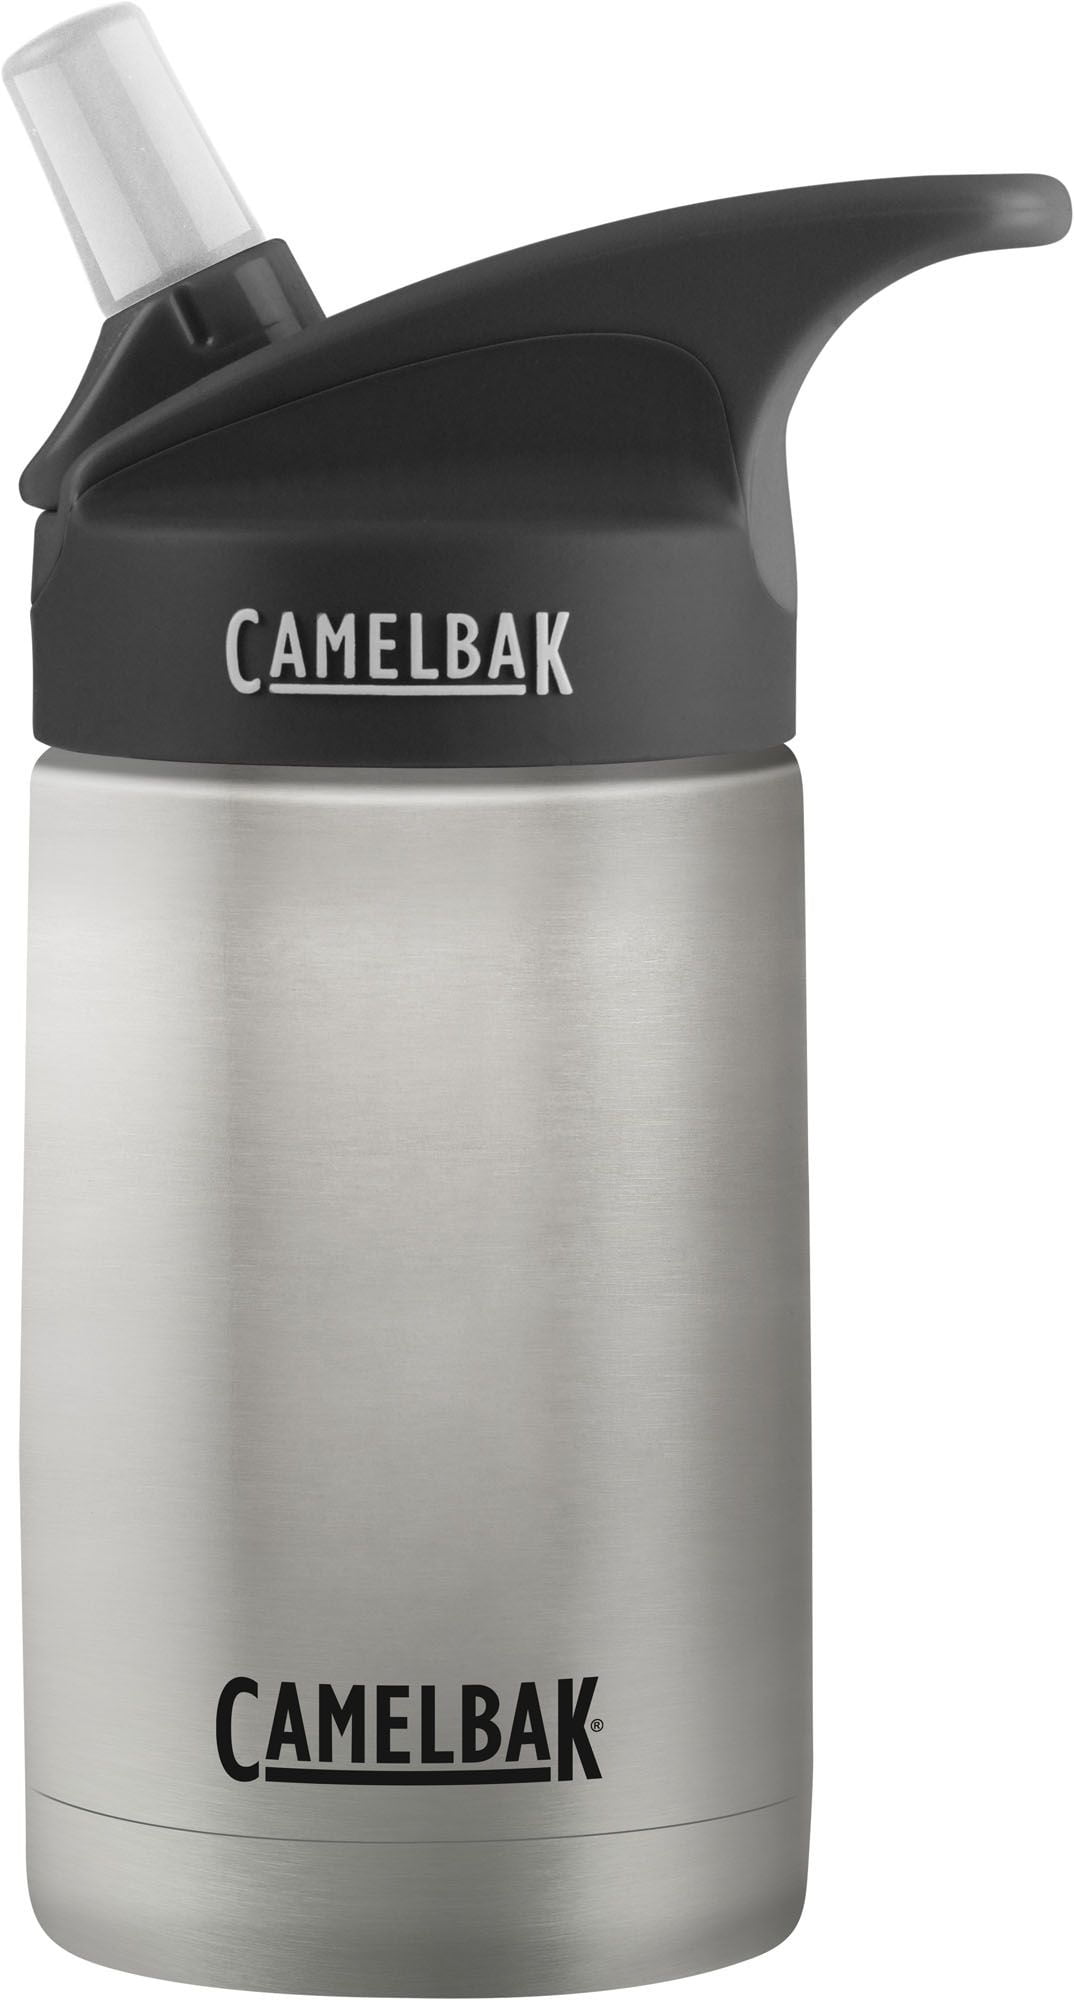 CamelBak Eddy Water Bottle 25 fl. oz., Black